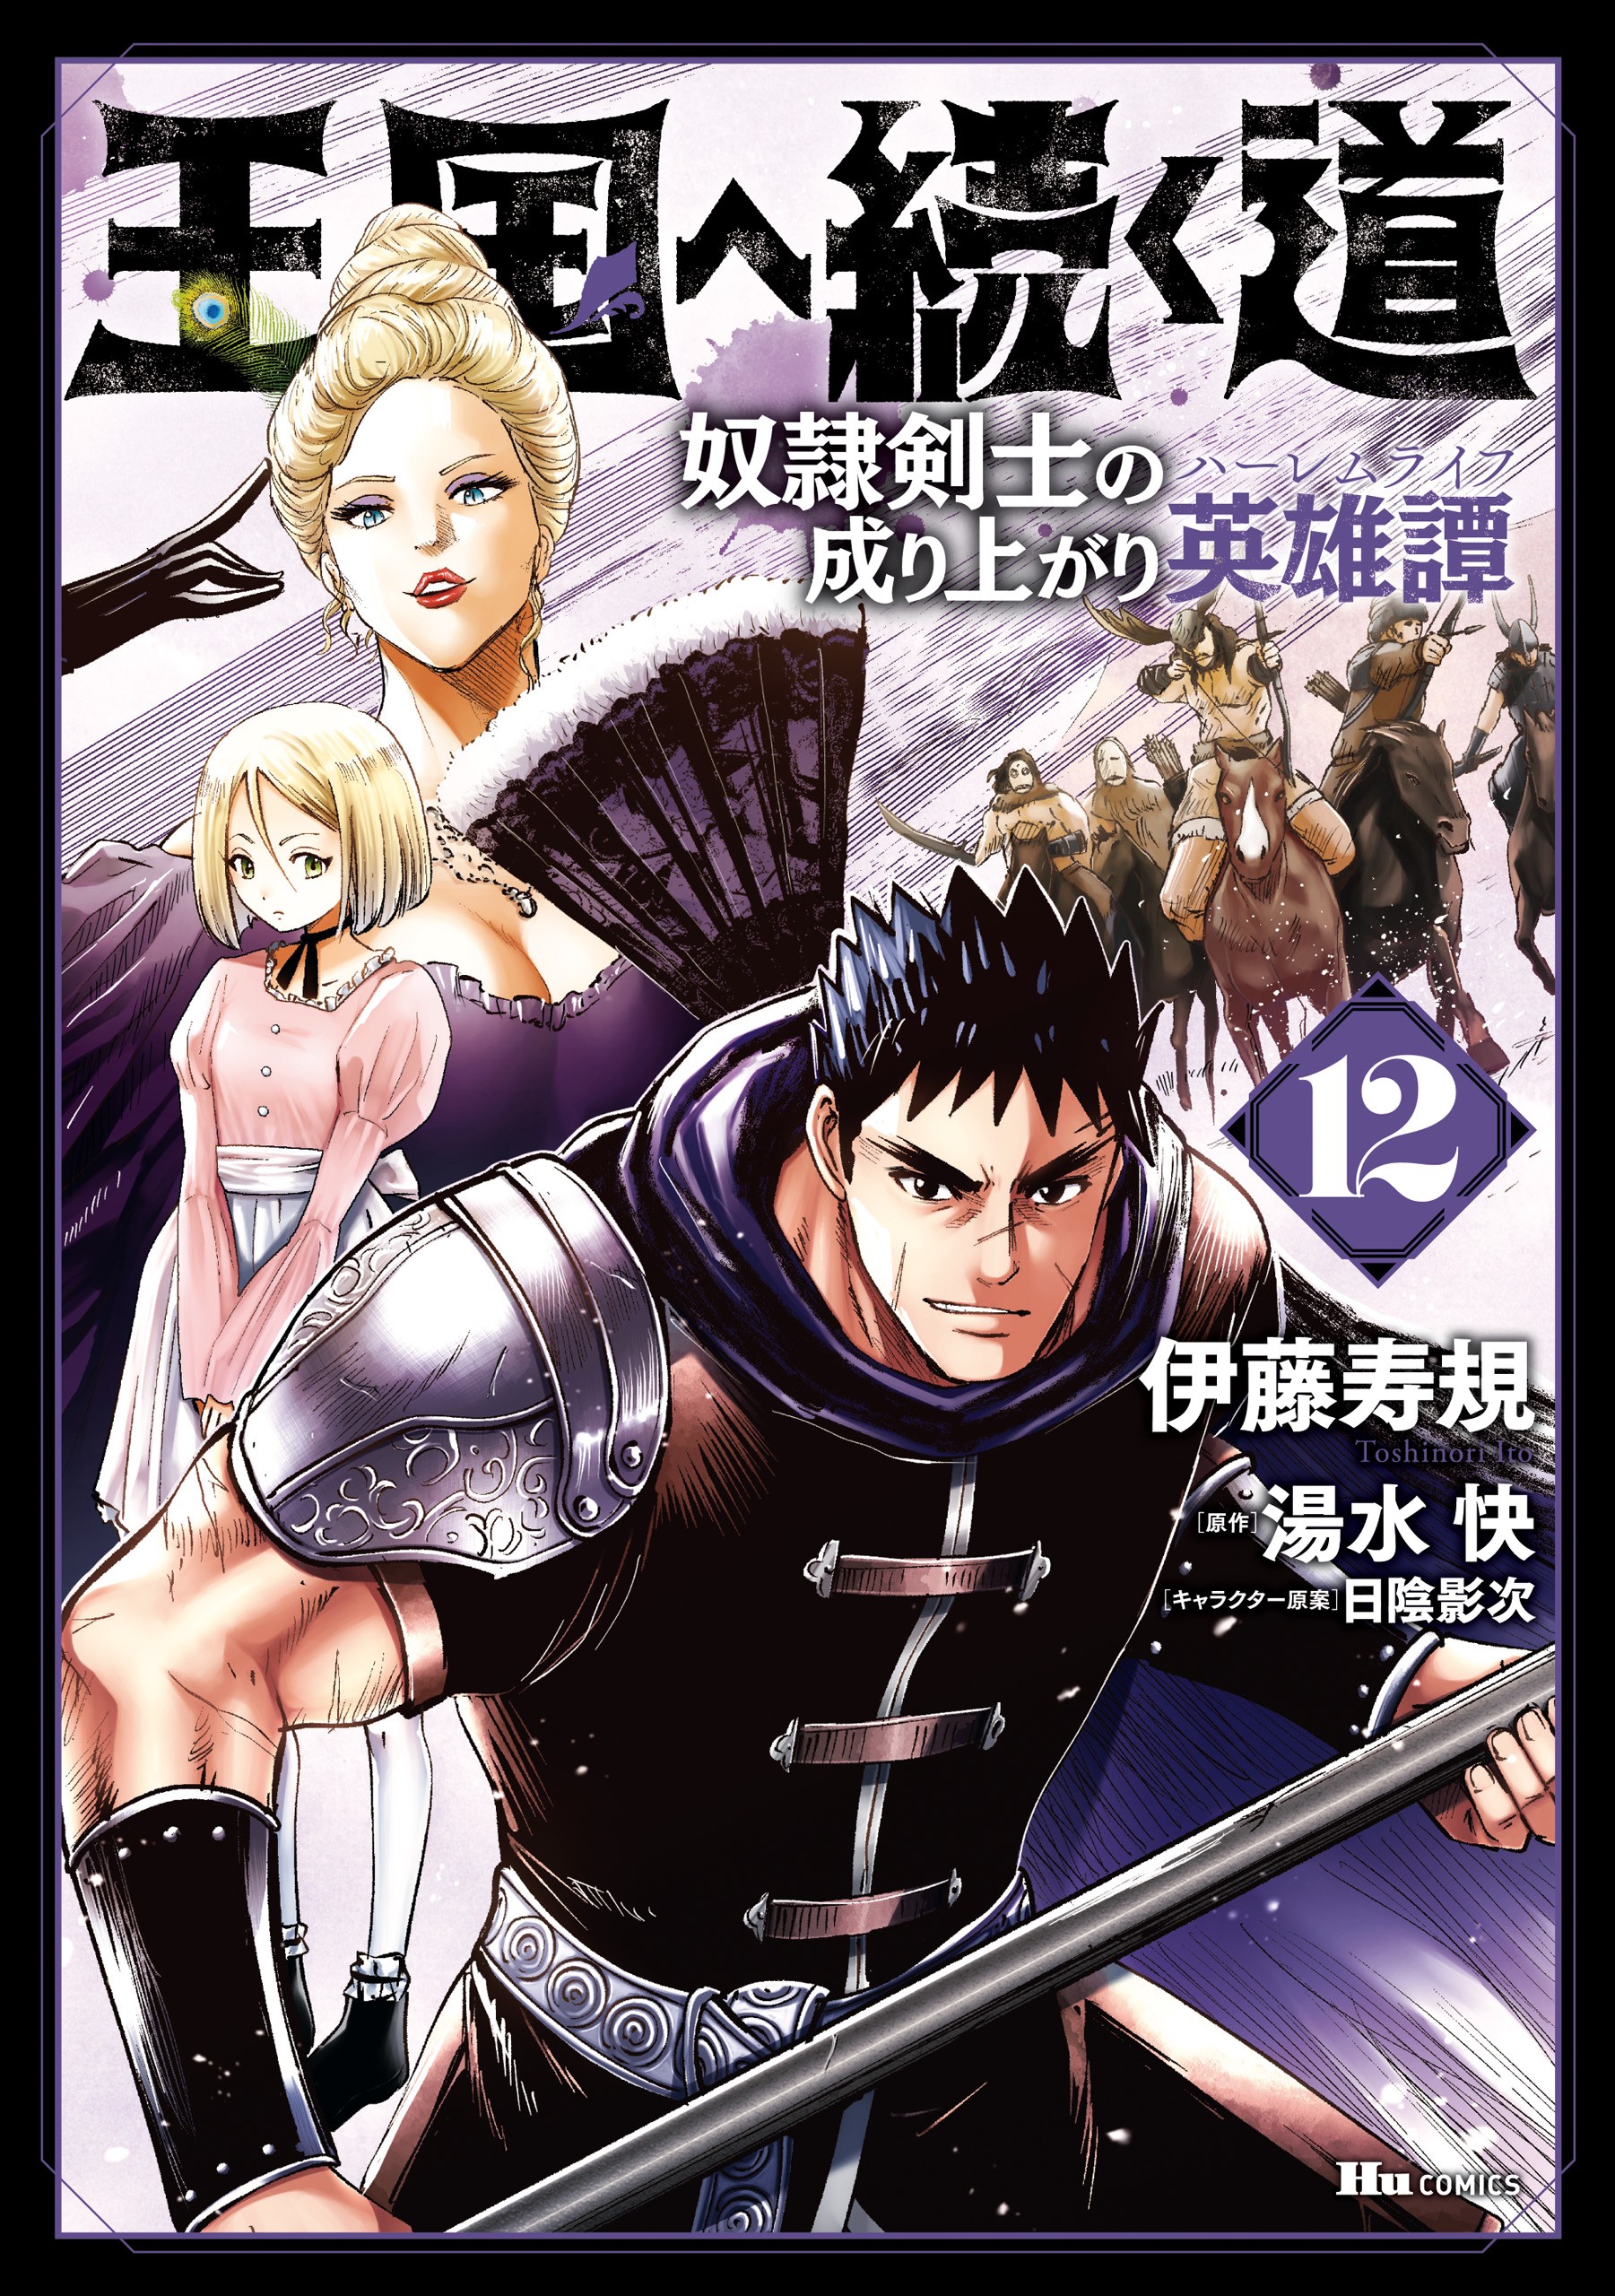 Road to kingdom manga